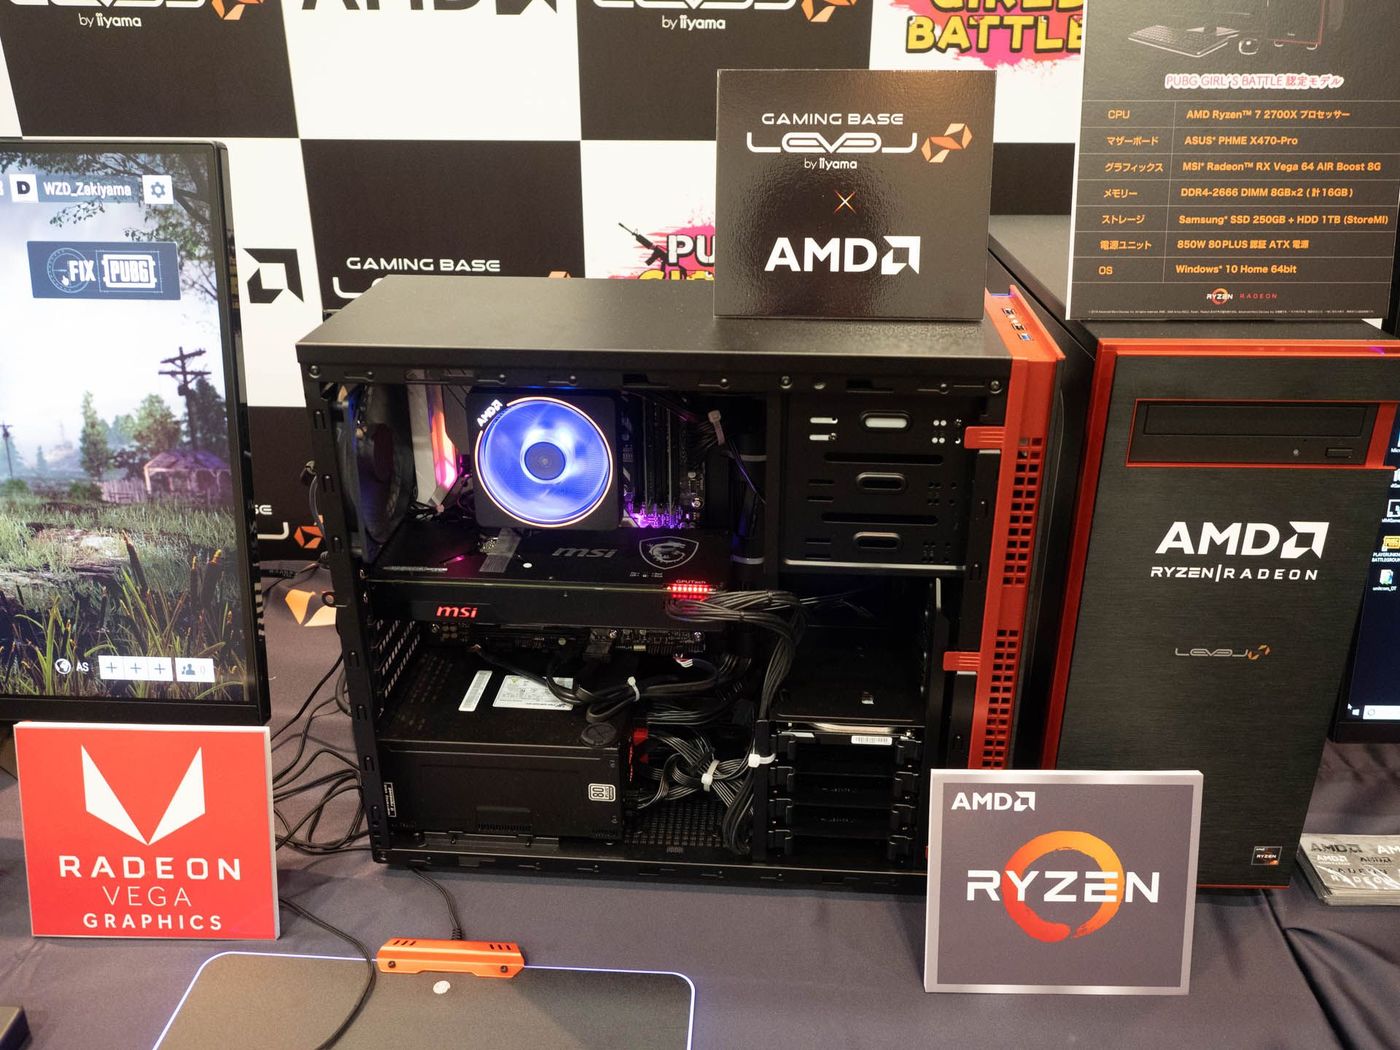 「AMD Ryzen 7 2700X」＆「Radeon RX Vega 64 AIR Boost 8G」の「LEVEL-R0X4-R72X-VSVI-PGB」